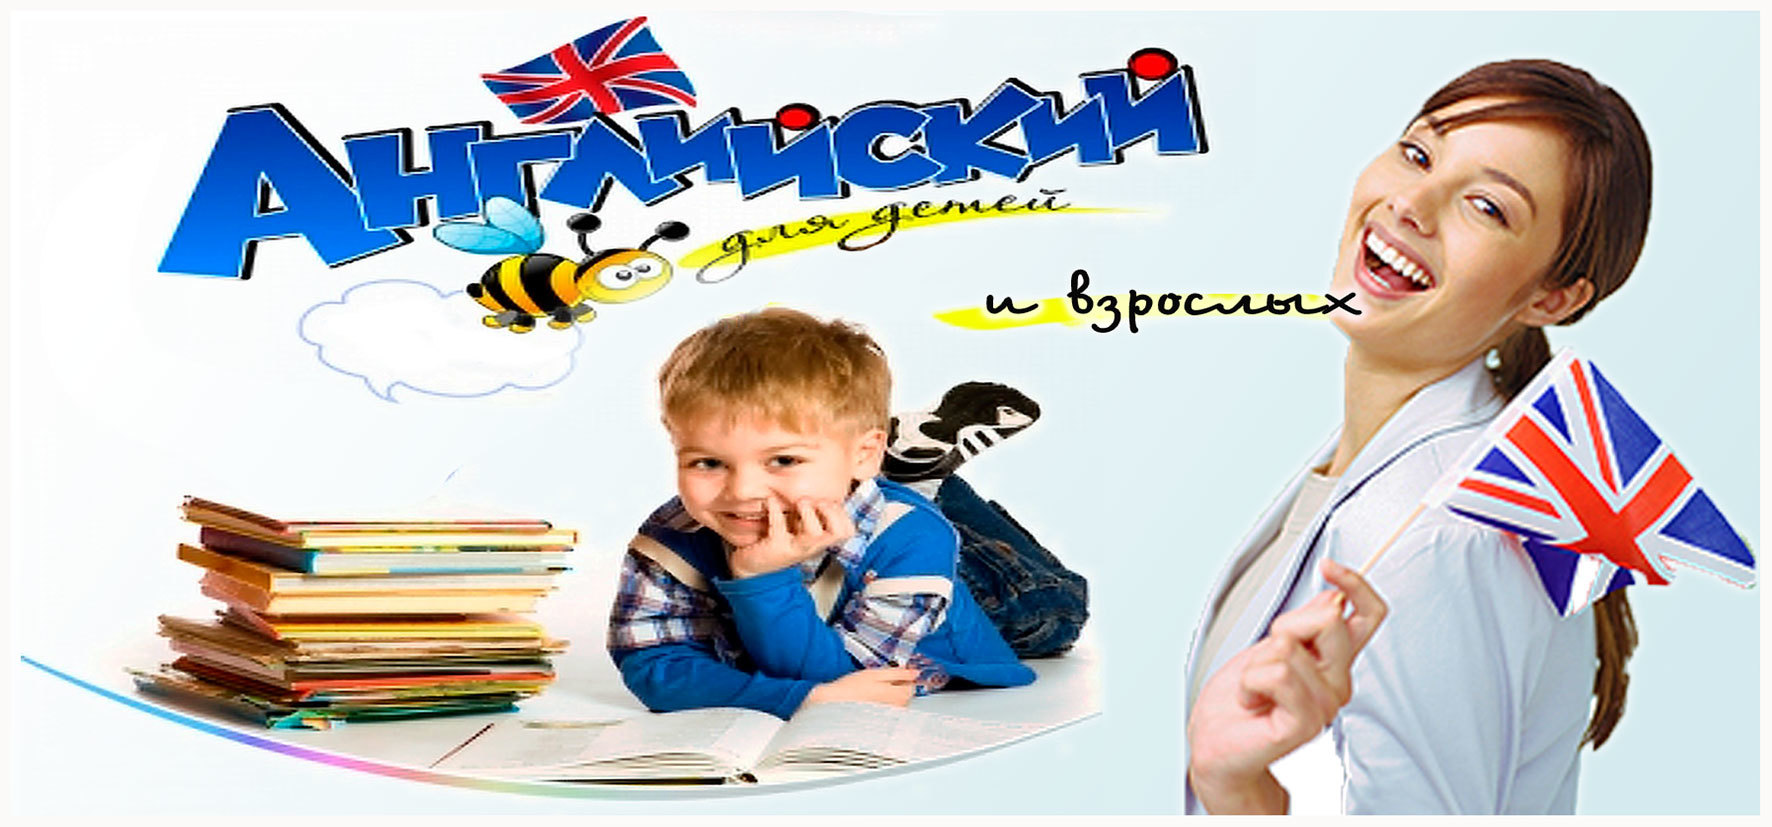 Английский ребенок россия. Английский для детей. Английский язык для детей. Изучение английского языка для детей. Дети на уроке английского.